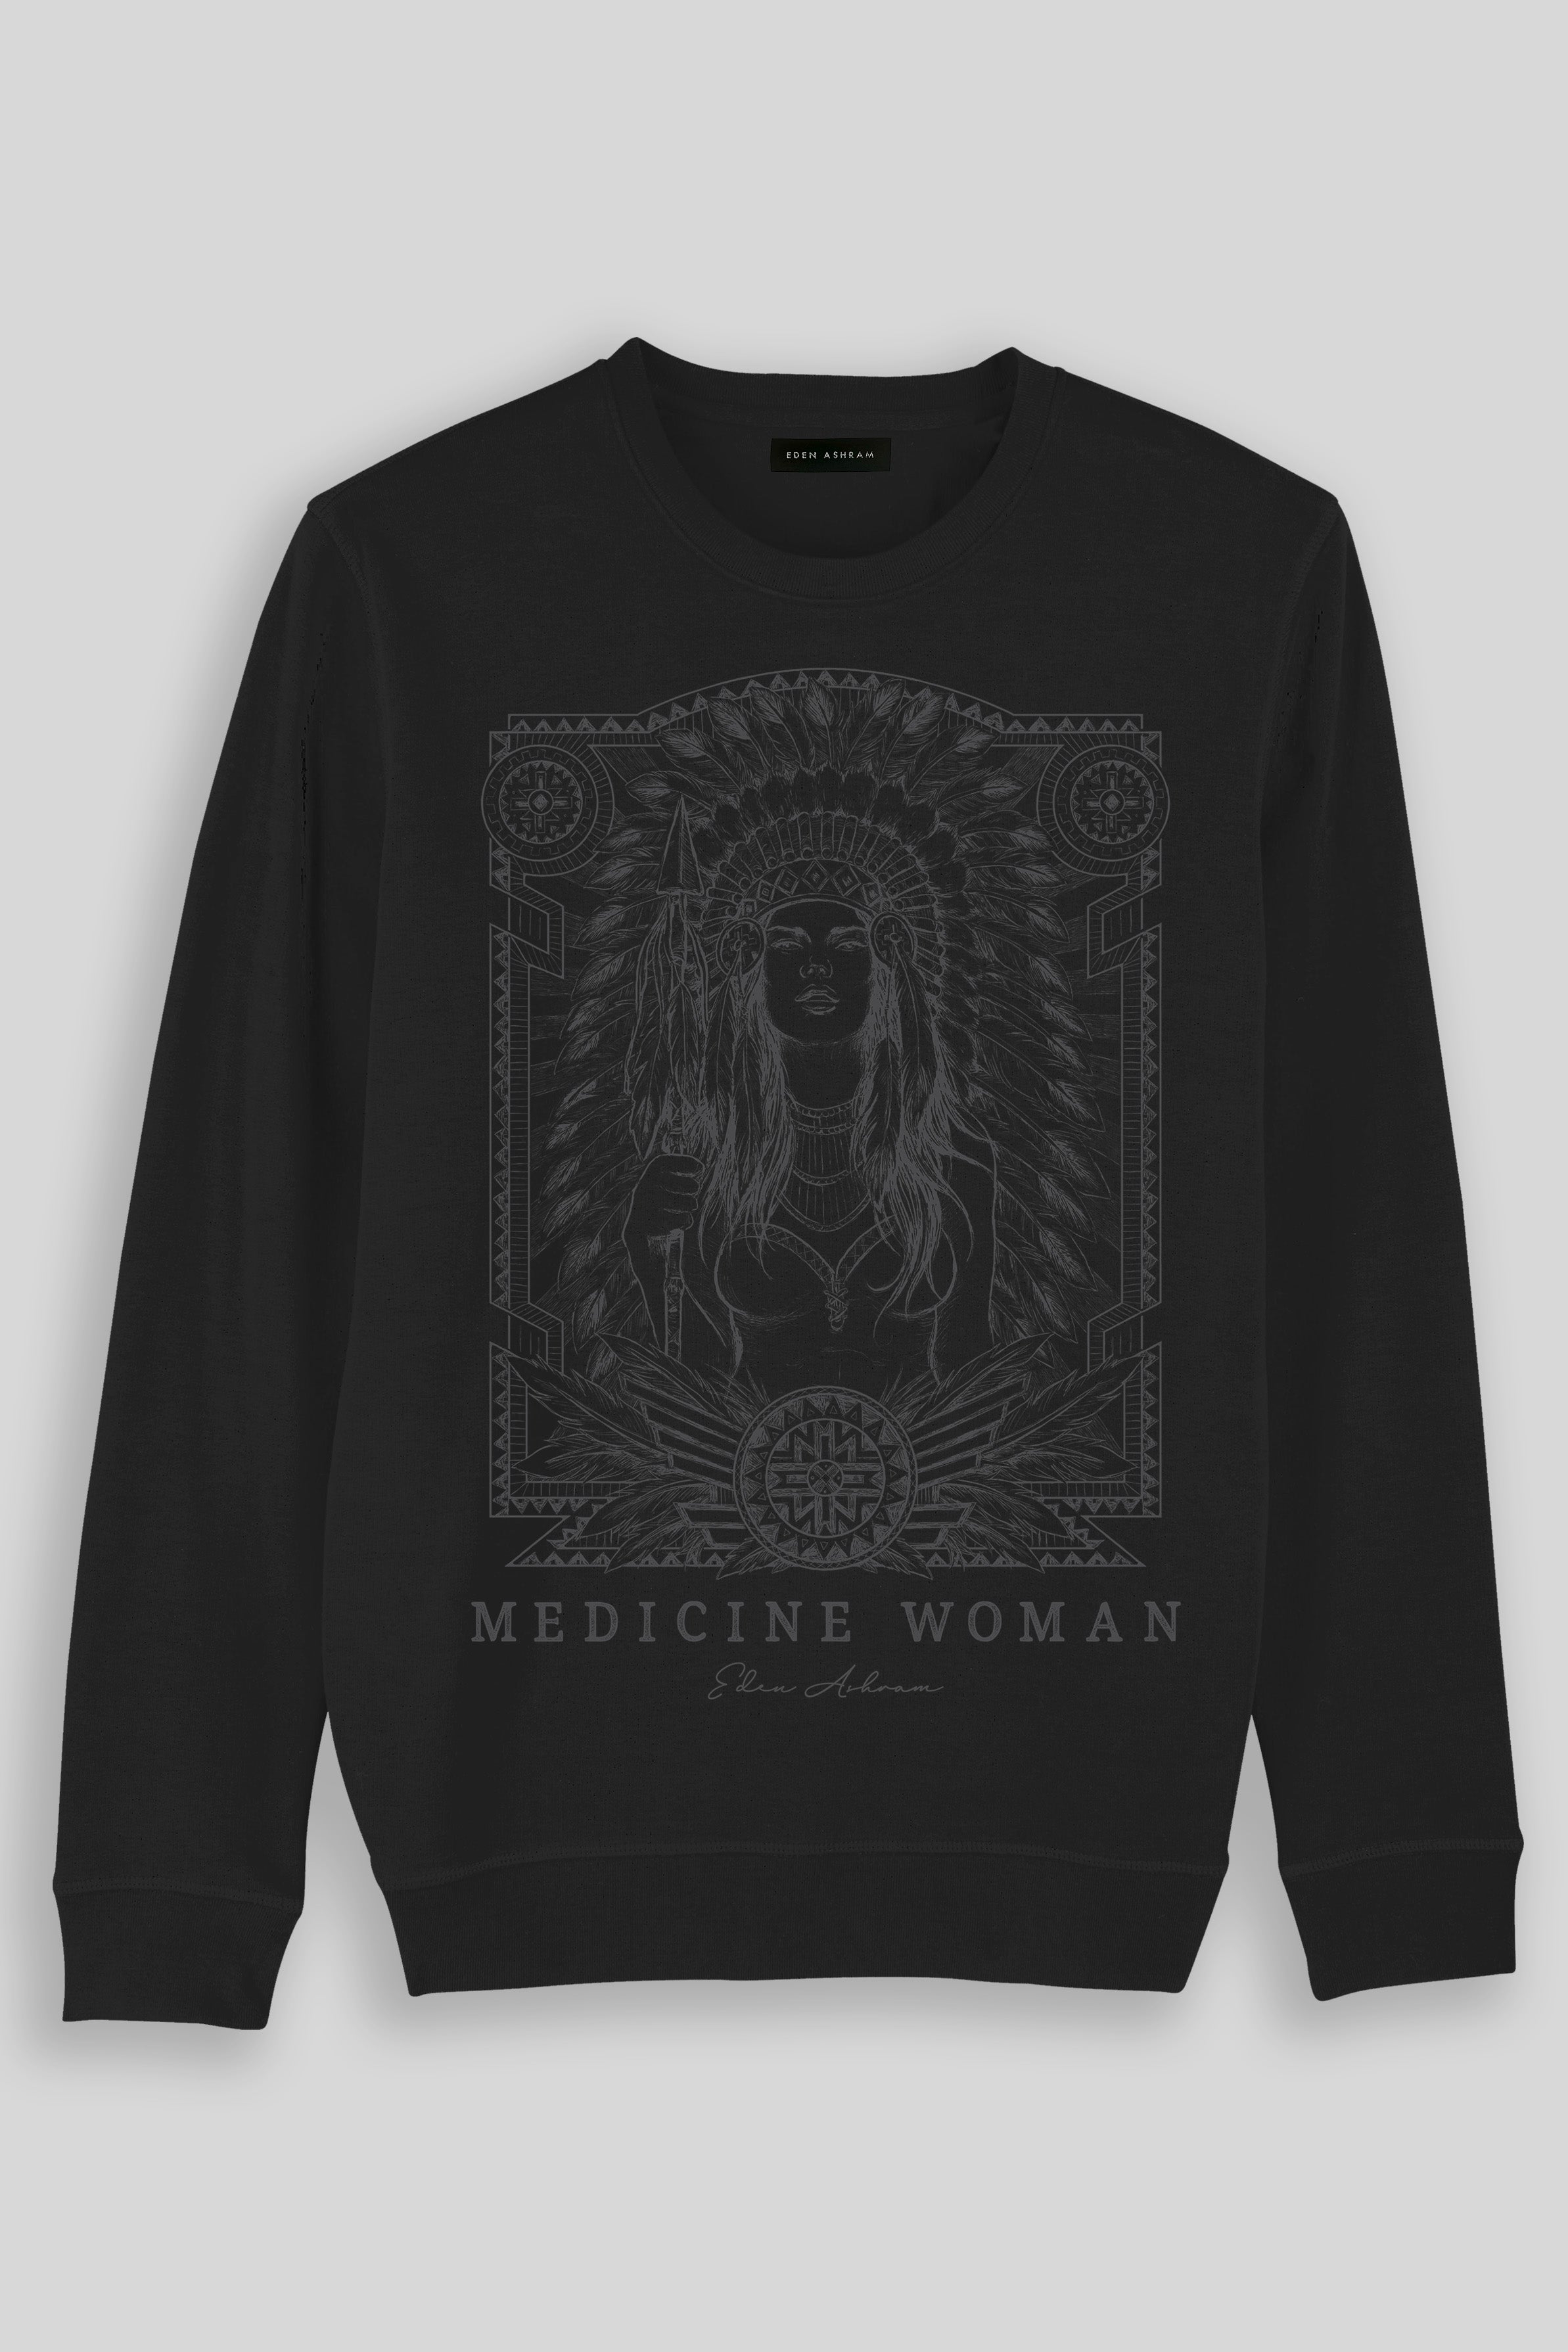 EDEN ASHRAM Medicine Woman Premium Crew Neck Sweatshirt Vintage Black